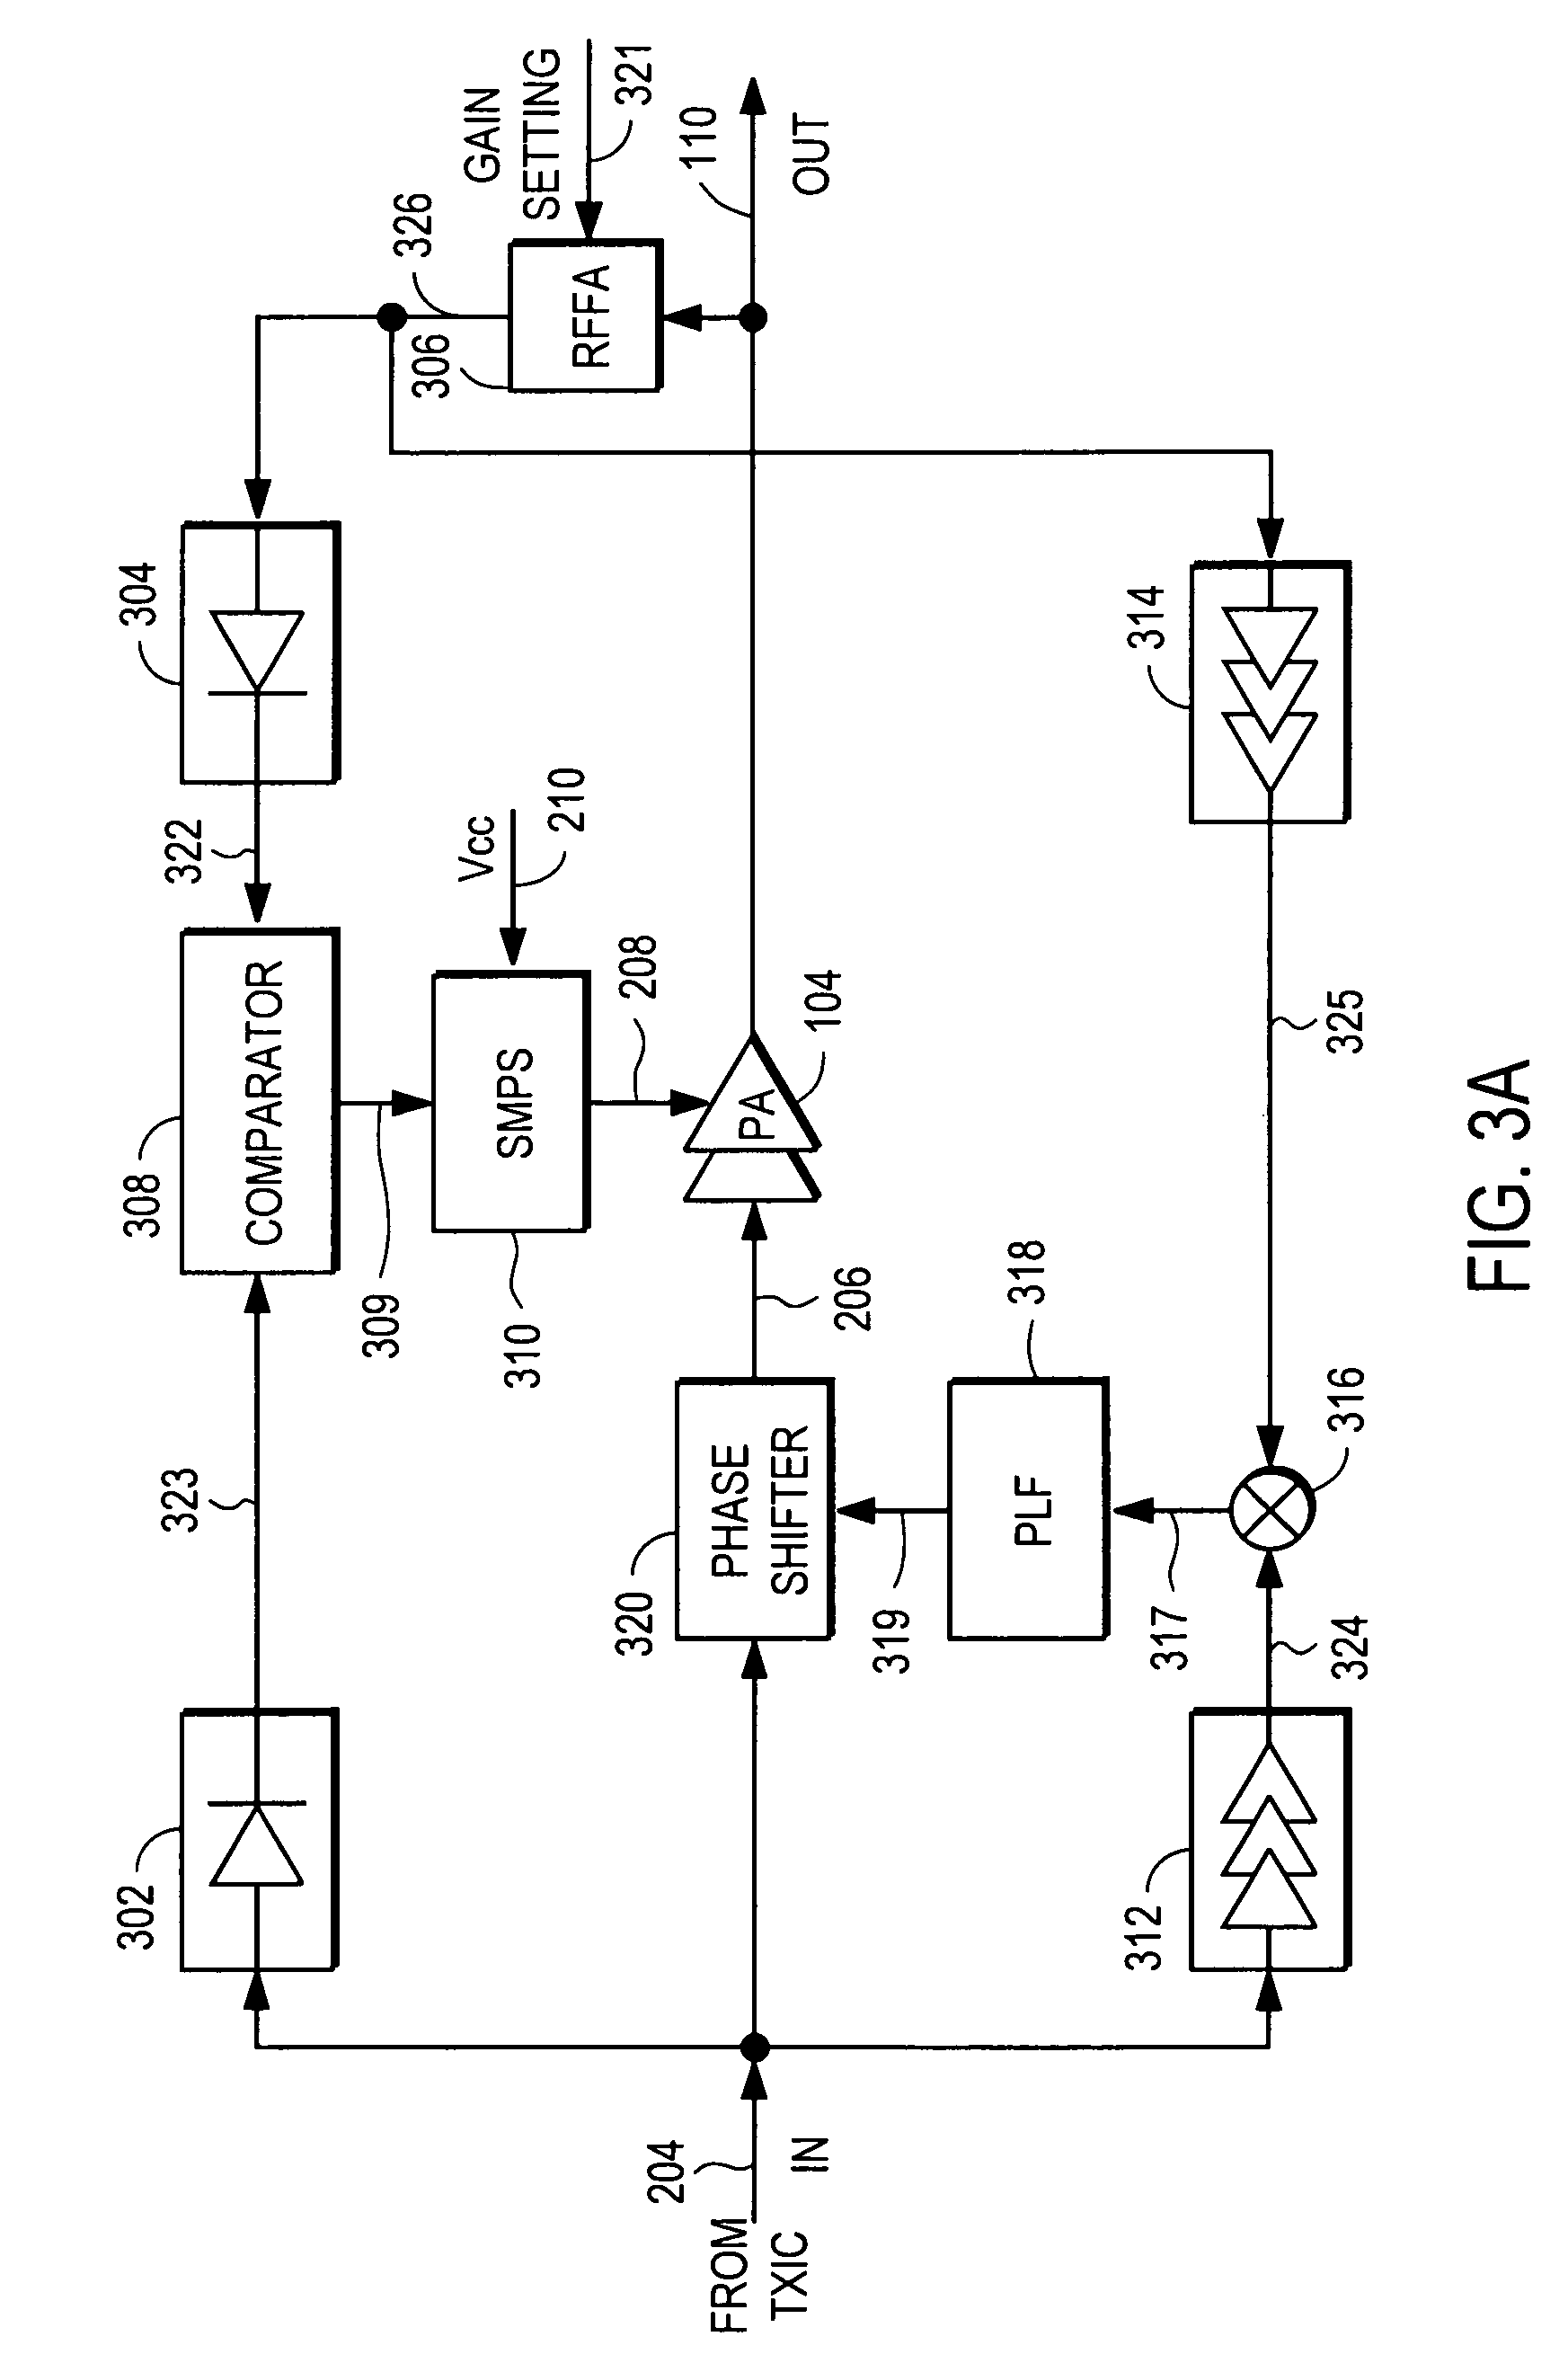 Amplifier compression adjustment circuit